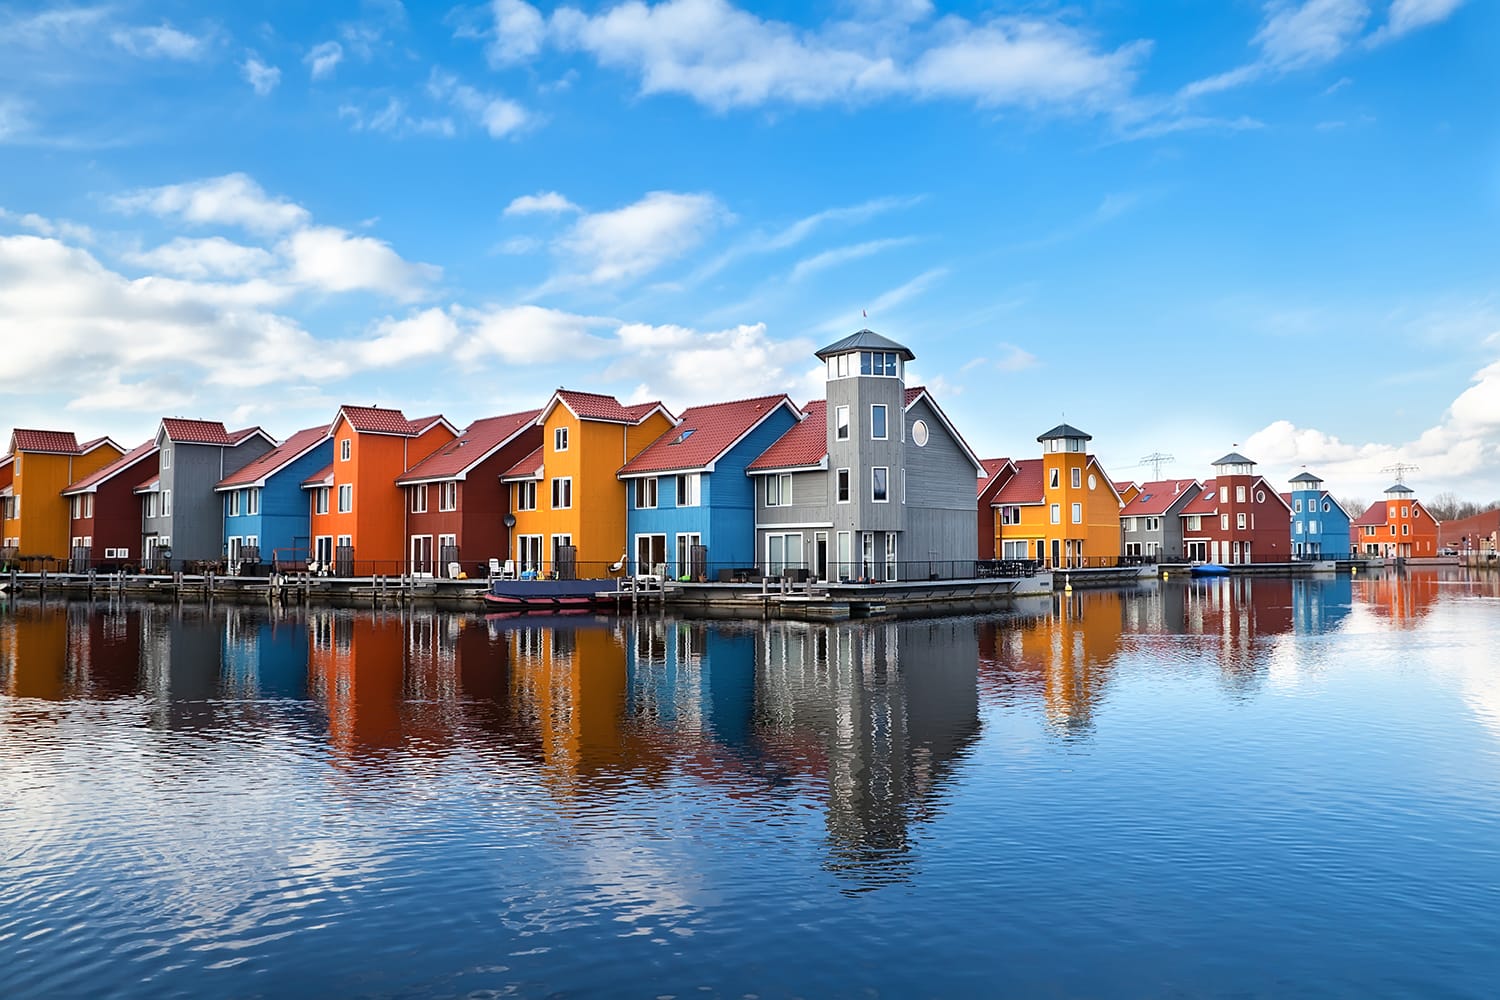 Reitdiephaven - πολύχρωμα κτίρια στο νερό στο Groningen, Κάτω Χώρες